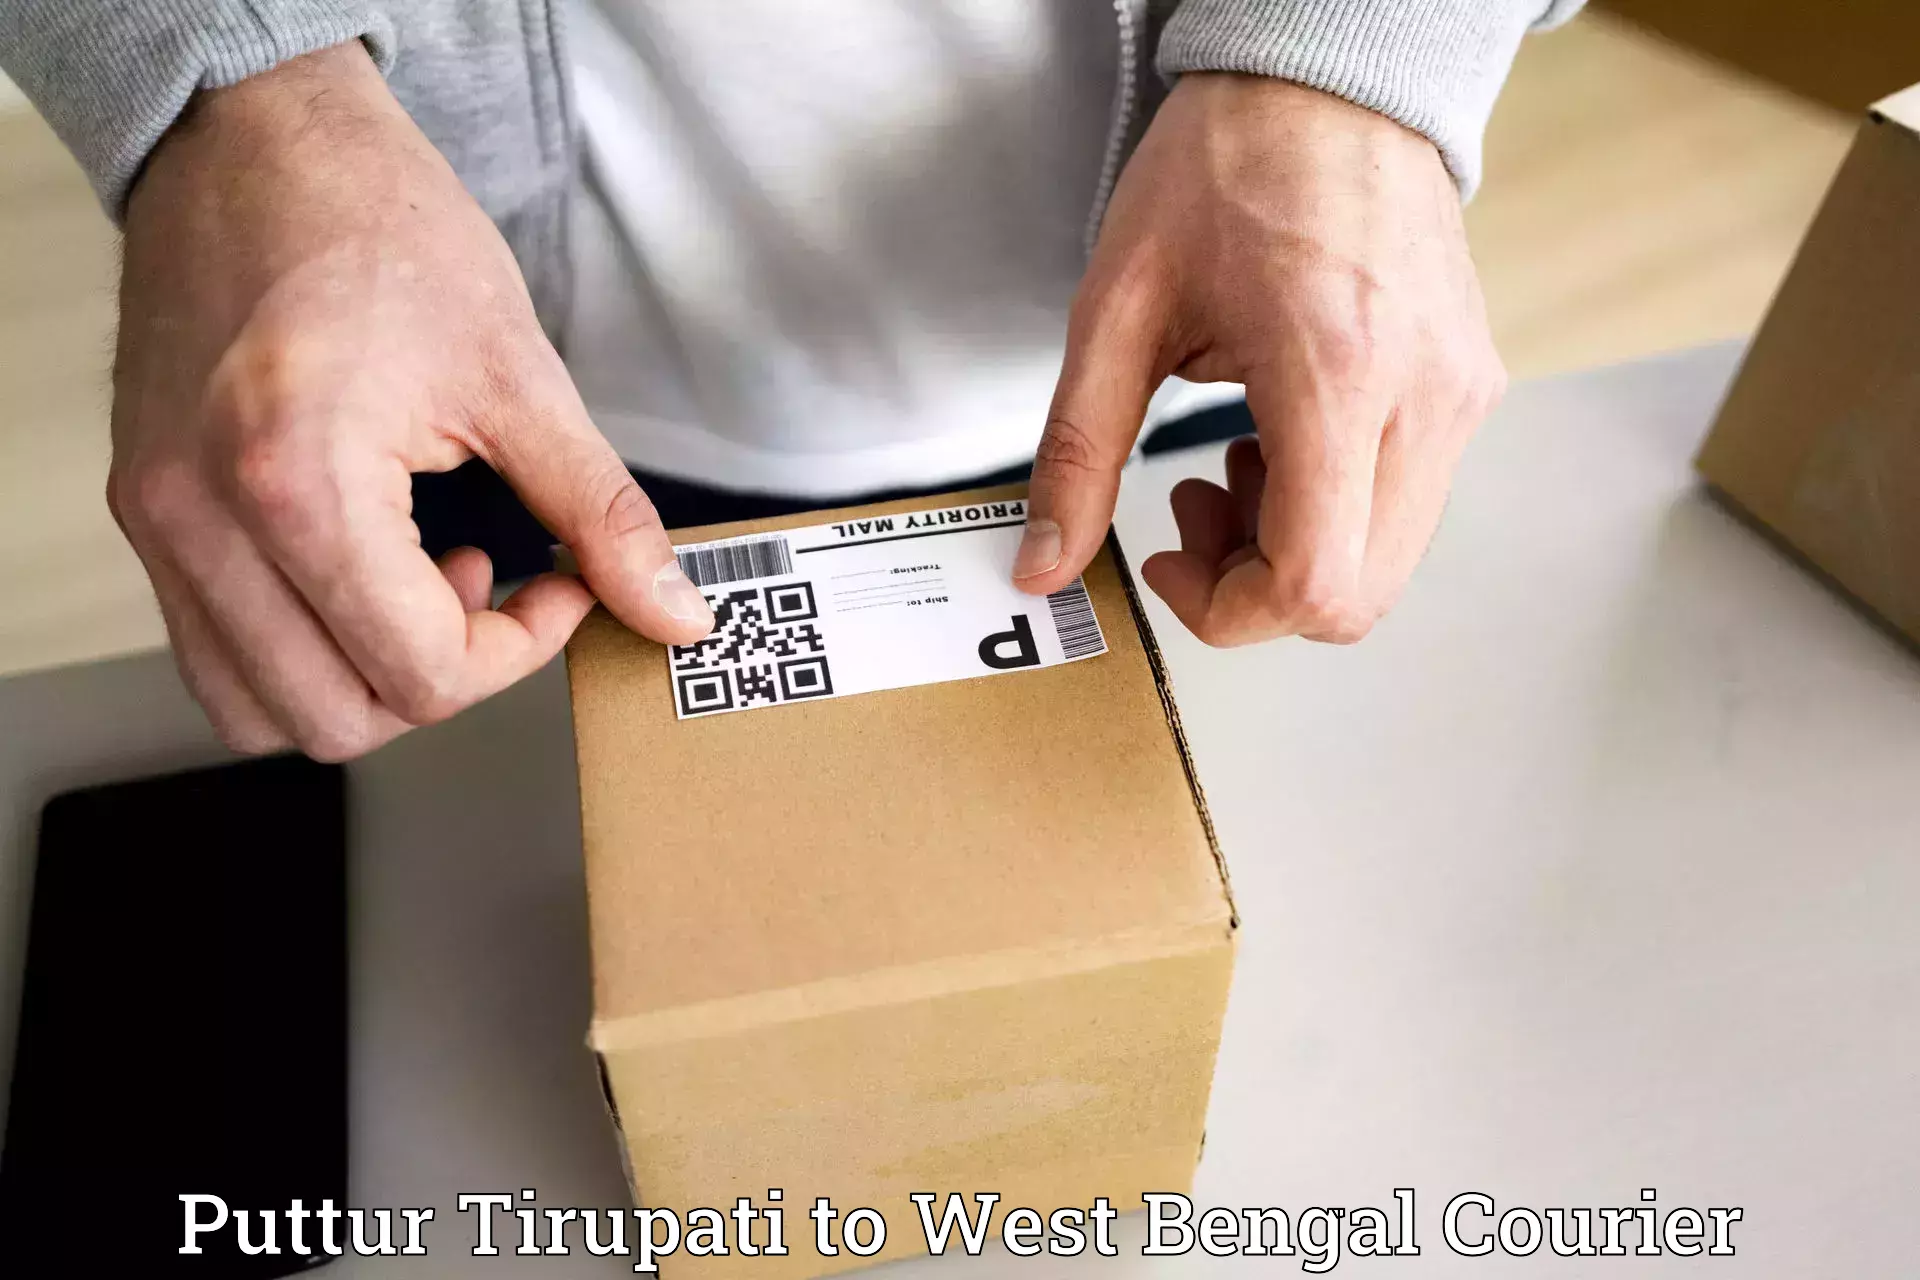 Expedited shipping methods Puttur Tirupati to West Bengal